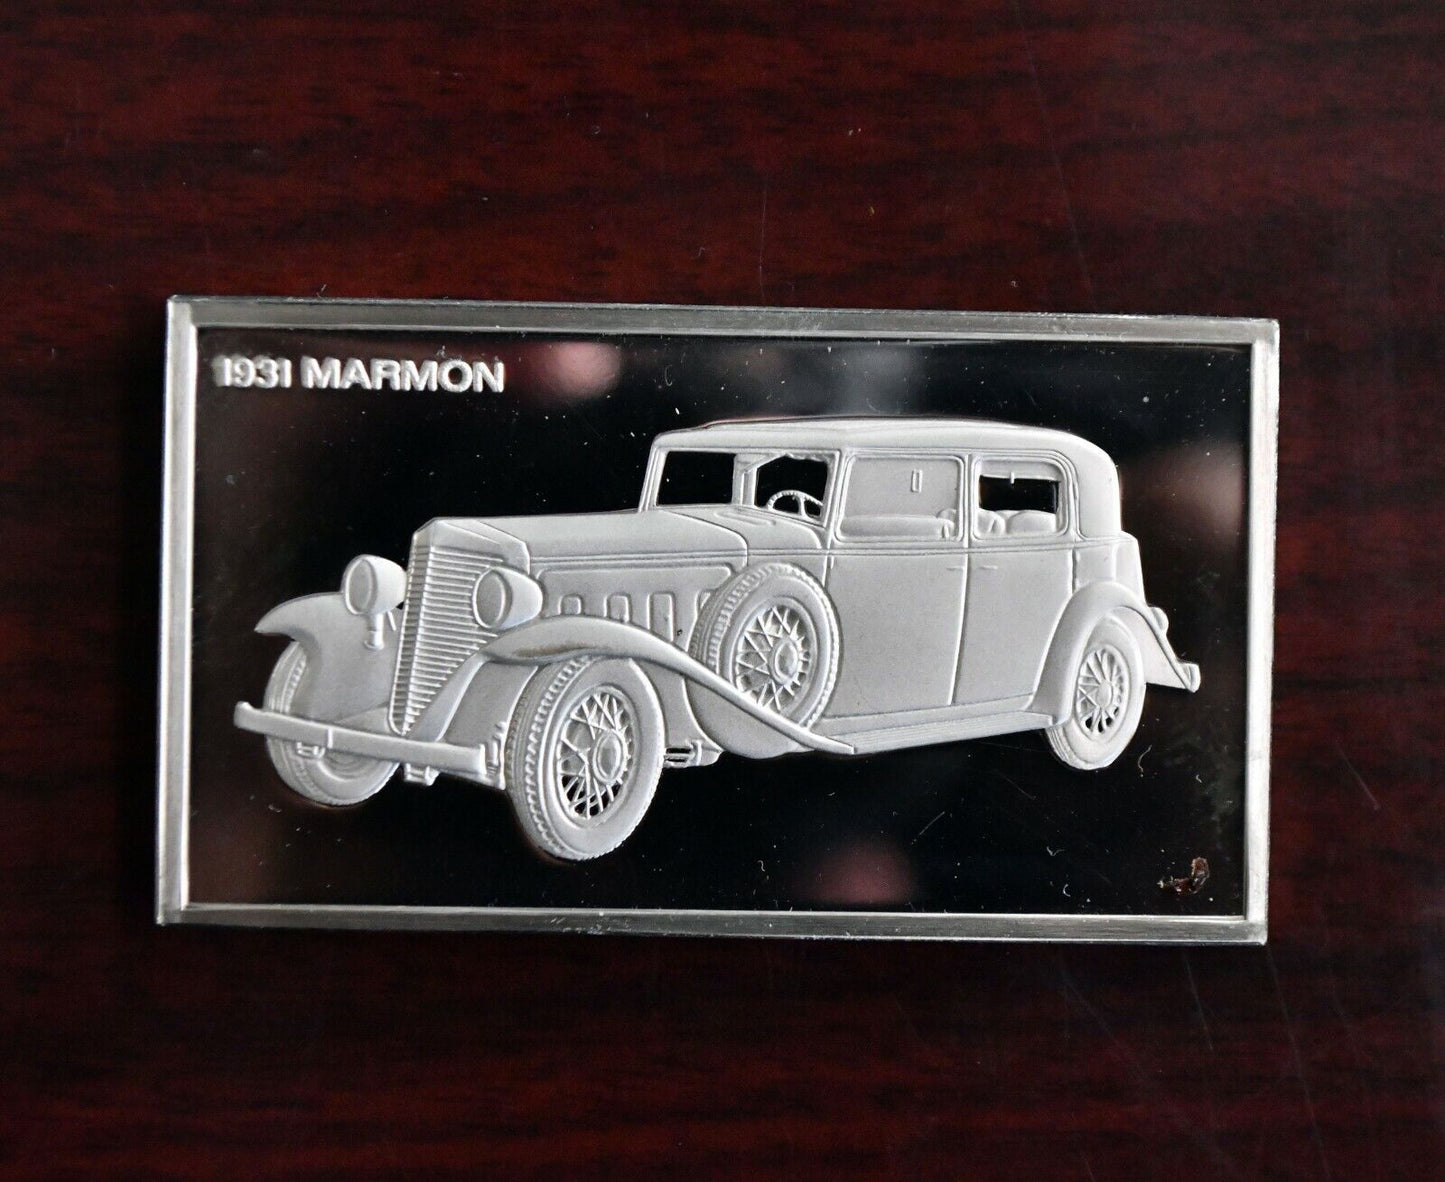 1931 Marmon Centennial Car Ingot Collection 1000 Grains Sterling Franklin Mint